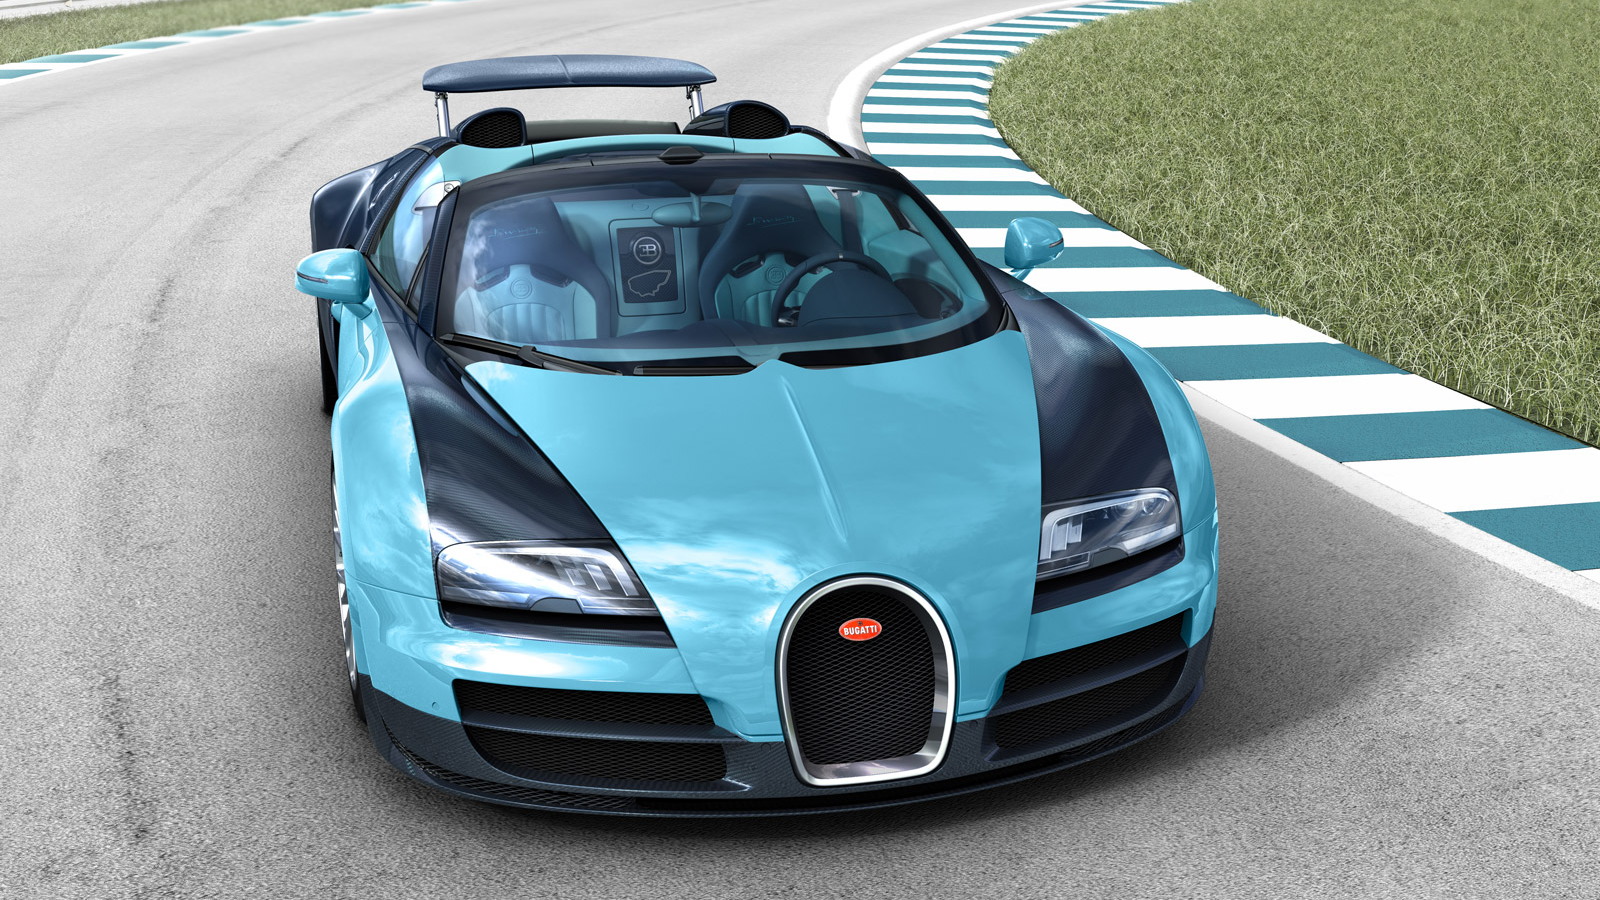 Bugatti Legend ‘Jean-Pierre Wimille’ Veyron Grand Sport Vitesse